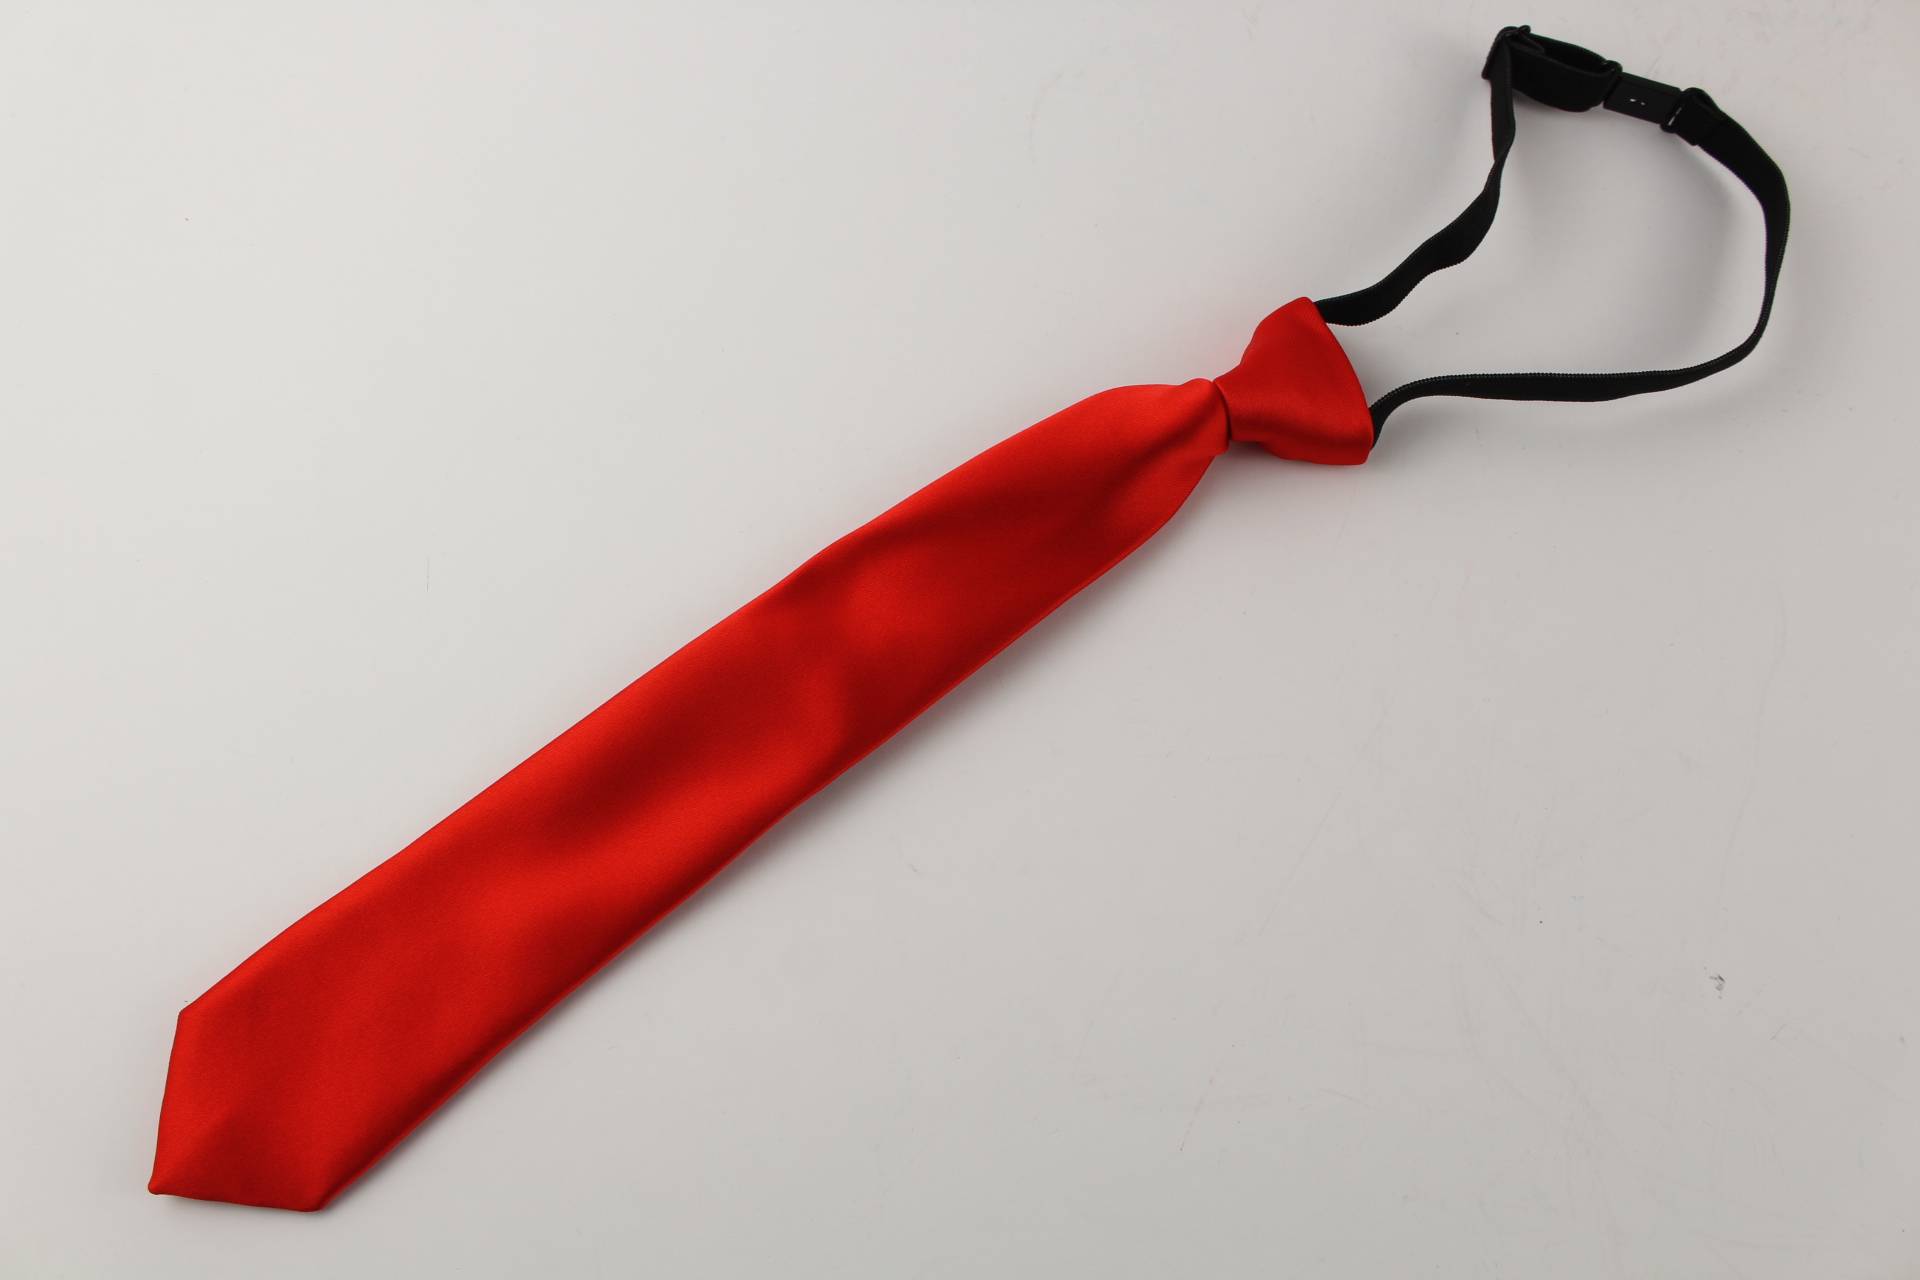 Сколько стоит галстук и от чего зависит цена на аксессуар?